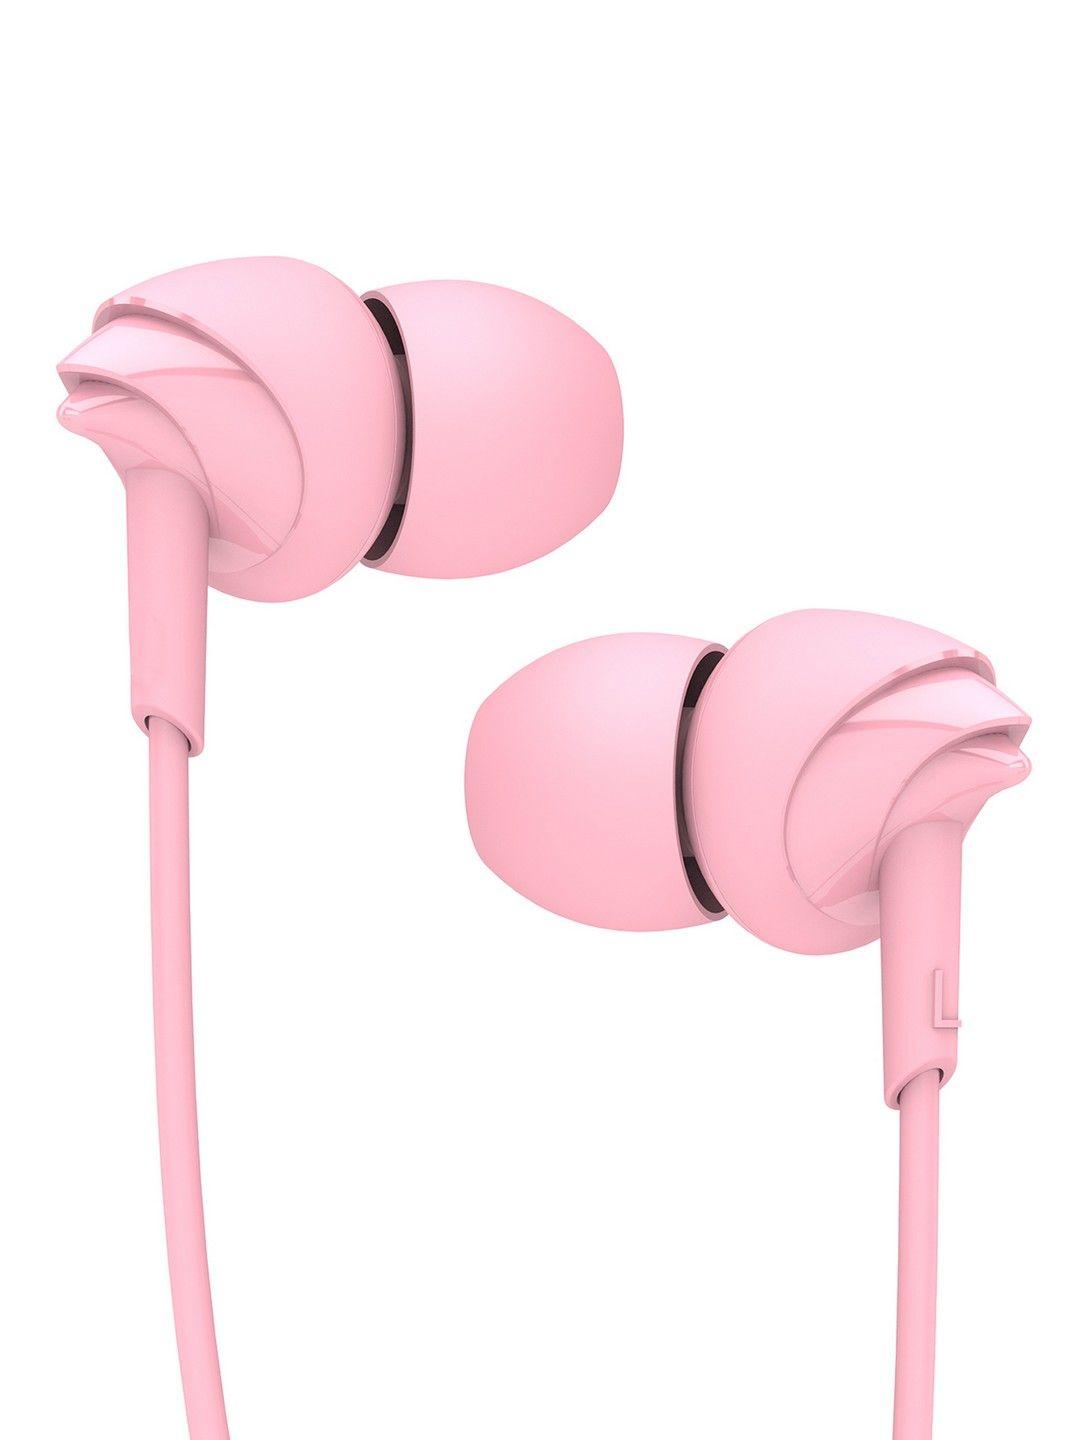 boat bassheads 100 m taffy pink earphones with enhanced bass hawk-inspired design & mic